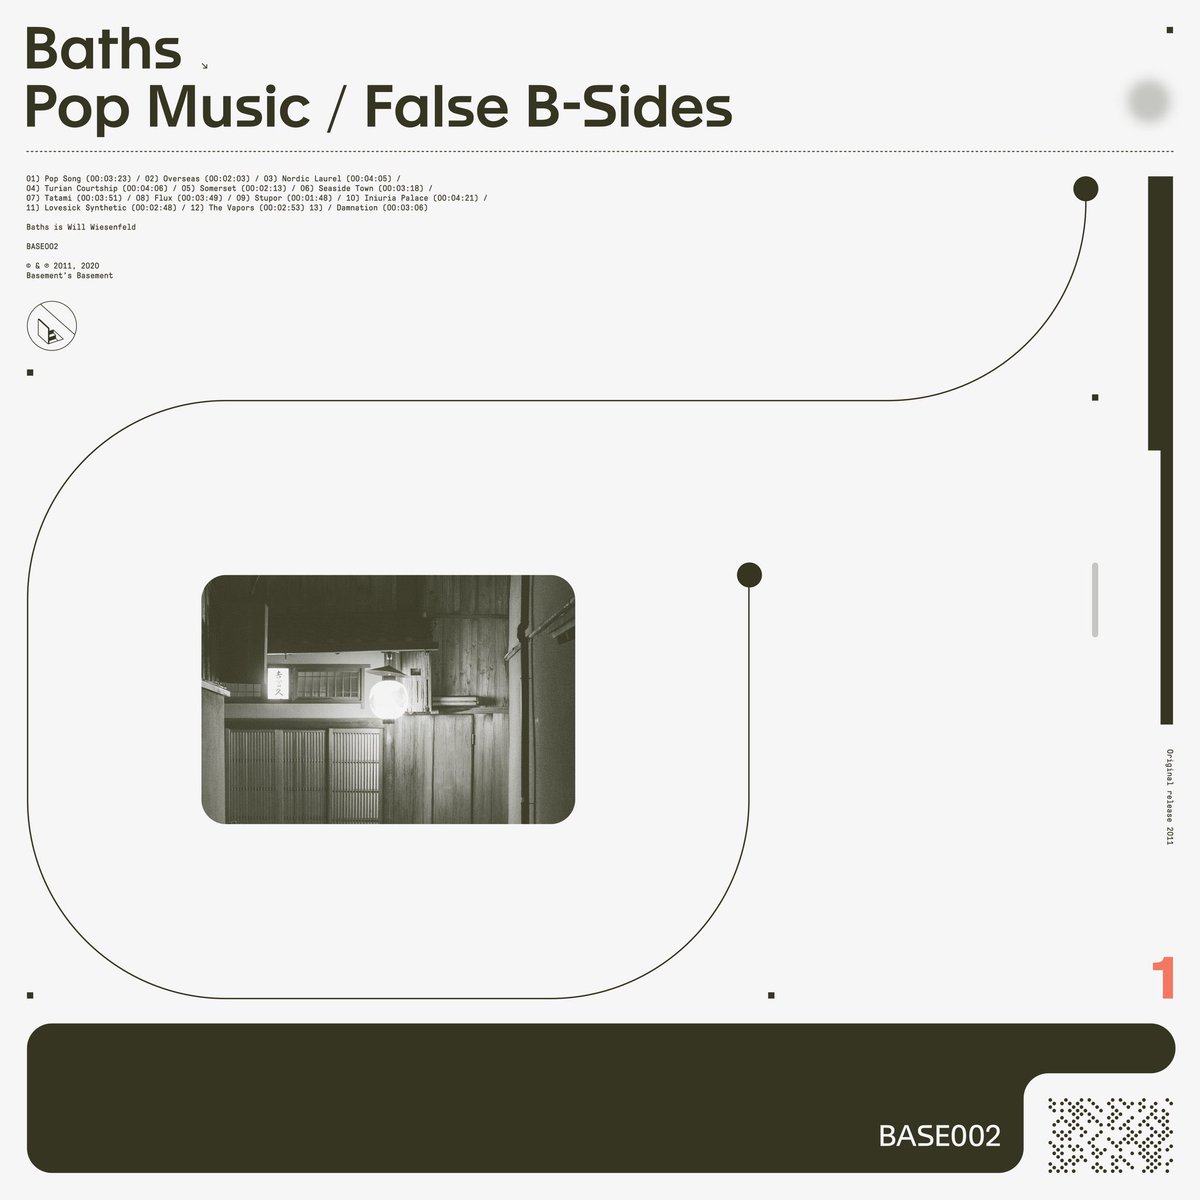 REISSUEPop Music / False B-Sides(2020 Remaster) https://bathsmusic.bandcamp.com/album/pop-music-false-b-sides-2020-remasterOriginally was a tour exclusive in 2011 w/ CD + Digital in Japan via  @tugboatrecords Management - Shaun Koplow ( @iamsodapop)Design - Cory Schmitz ( @CorySchmitz)Mastering - John Tejada ( @johntejada)